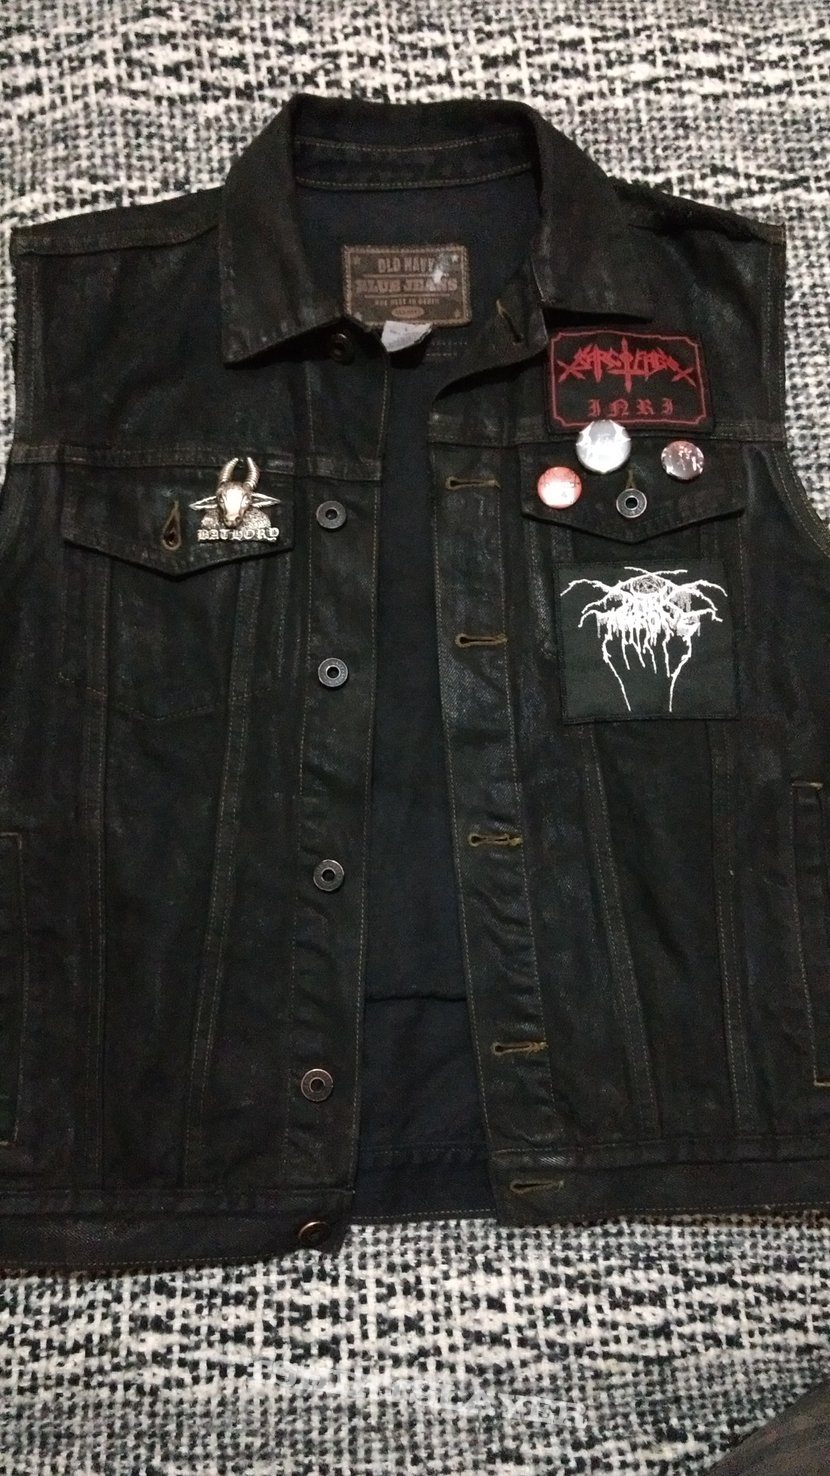 Bathory Black metal vest 